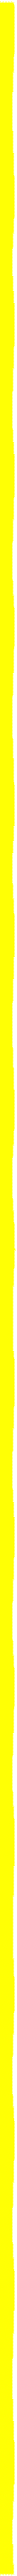 yellow boarder